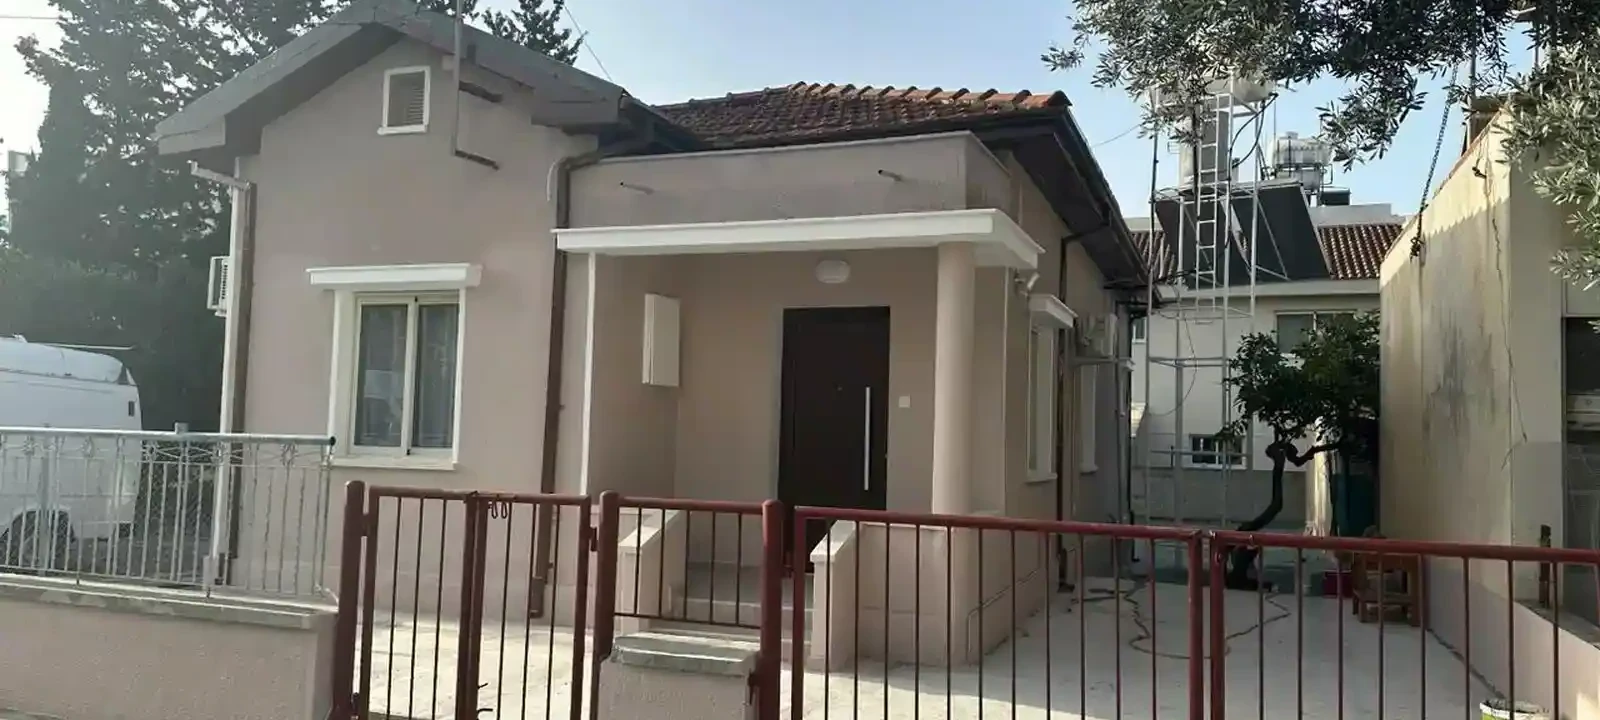 2-bedroom detached house to rent €1.500, image 1